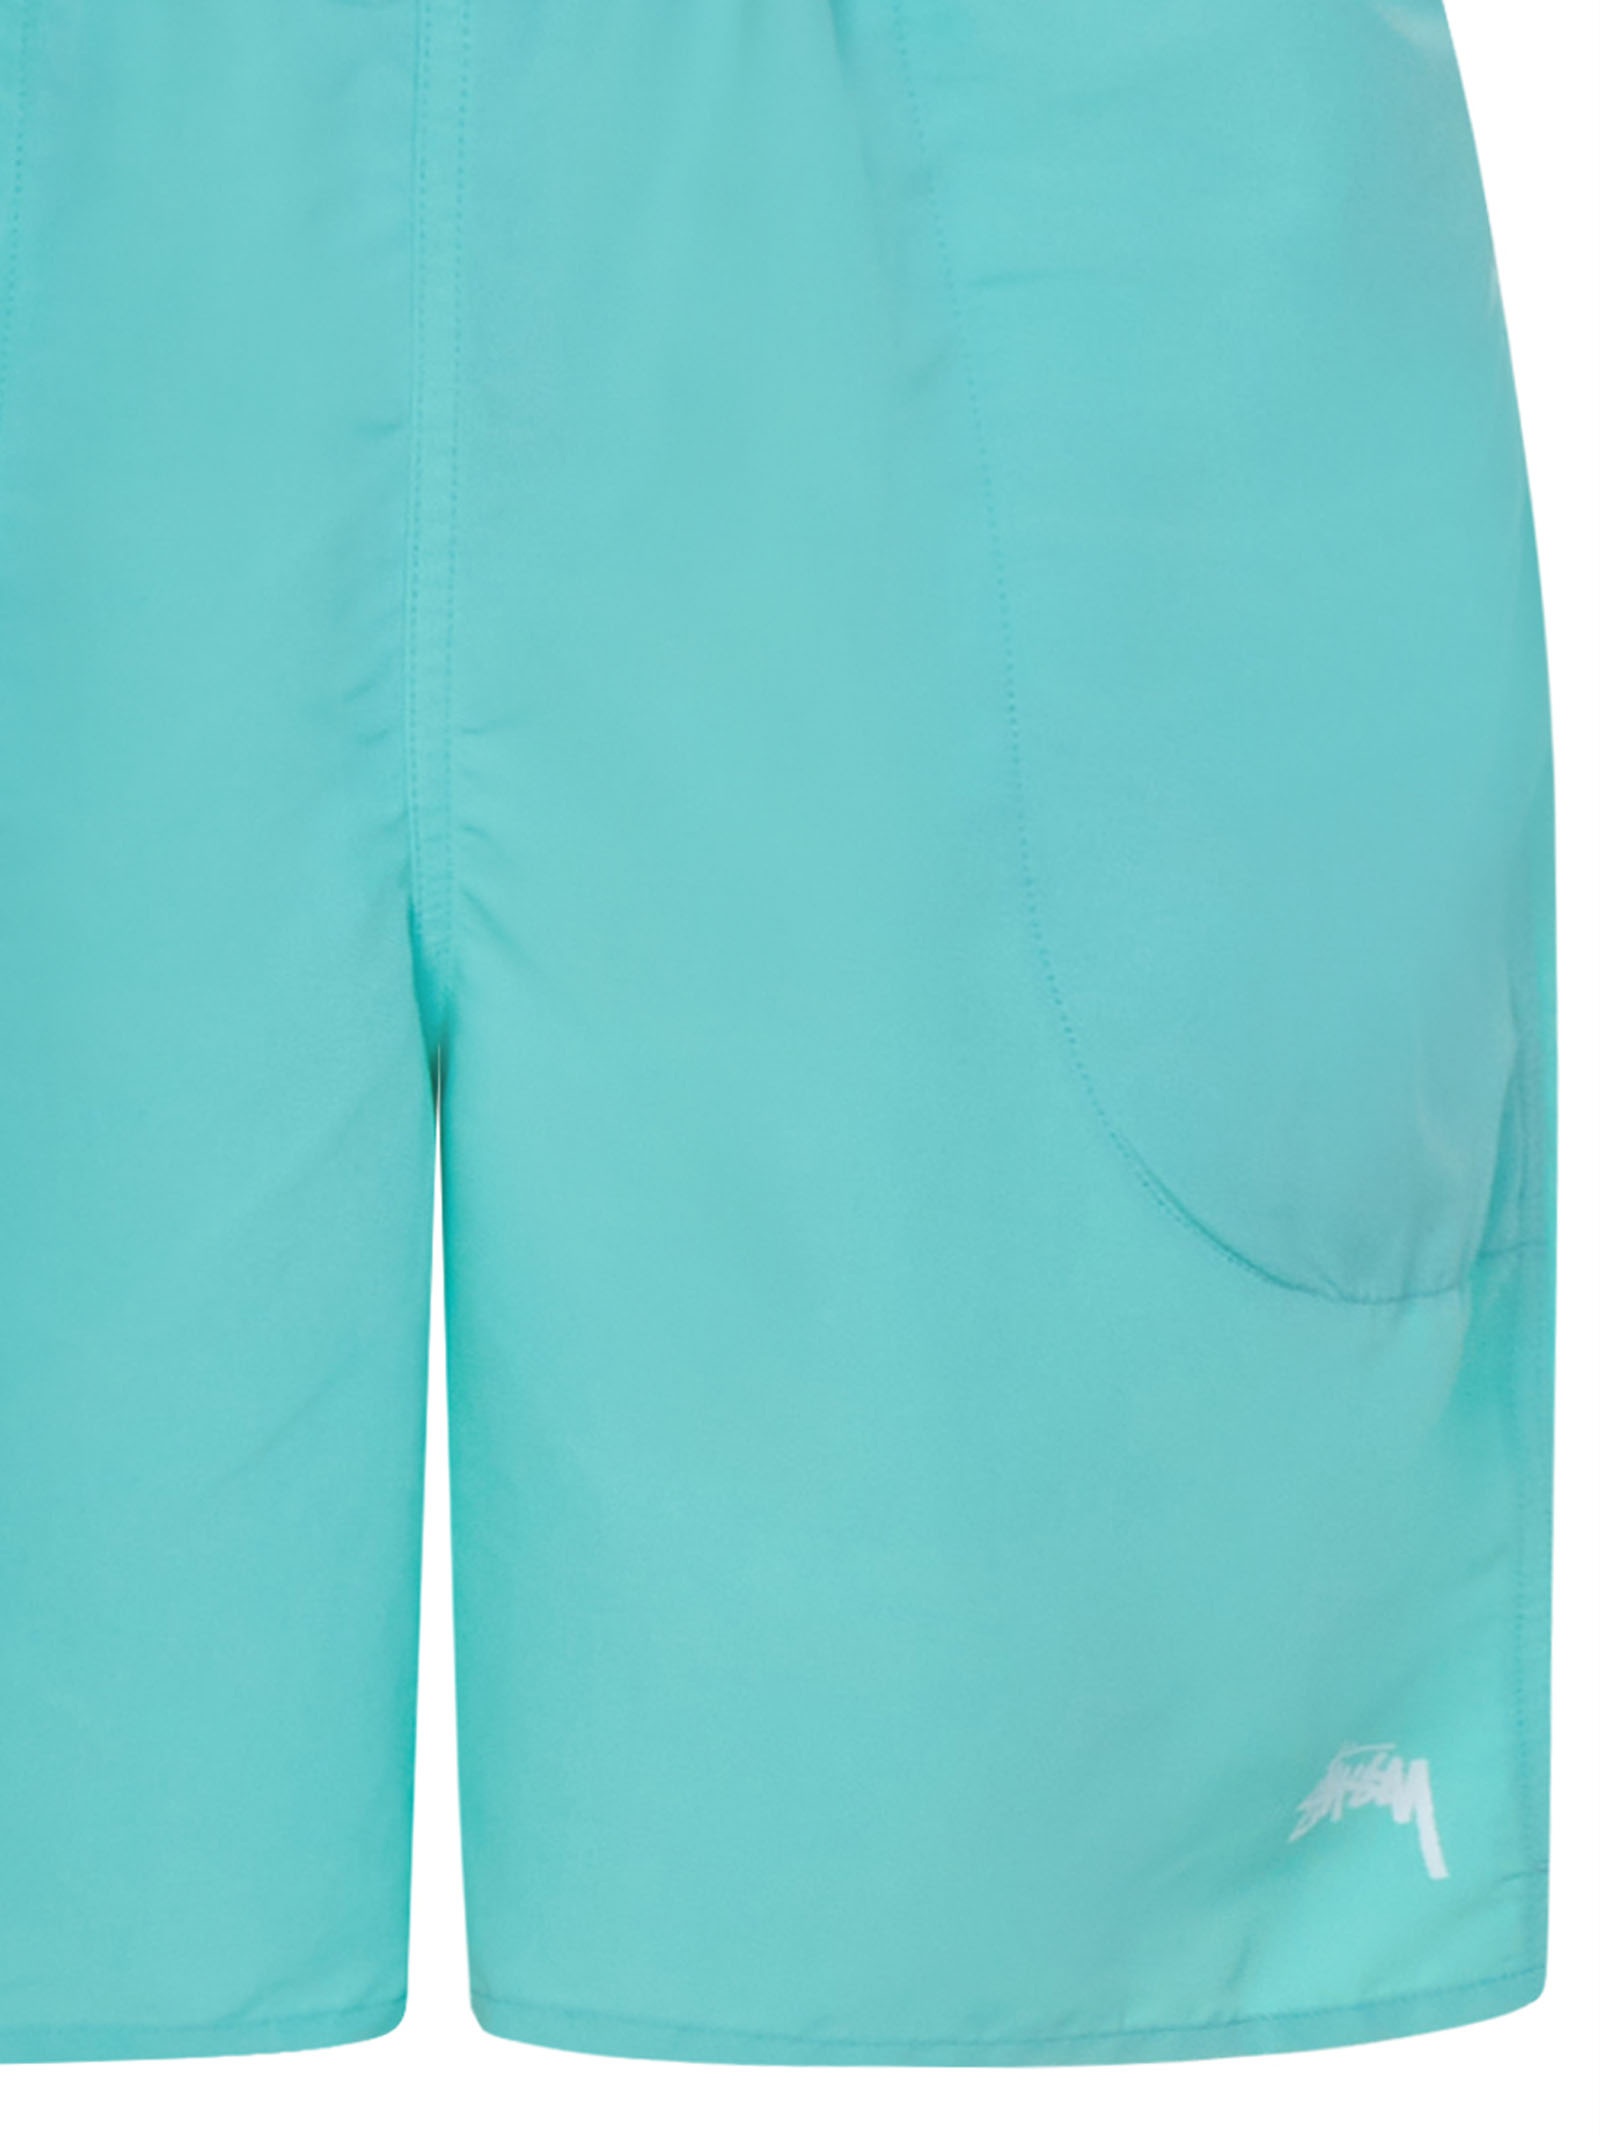 Swimsuit in aquamarine nylon with screen-printed logo on the left leg. - 3